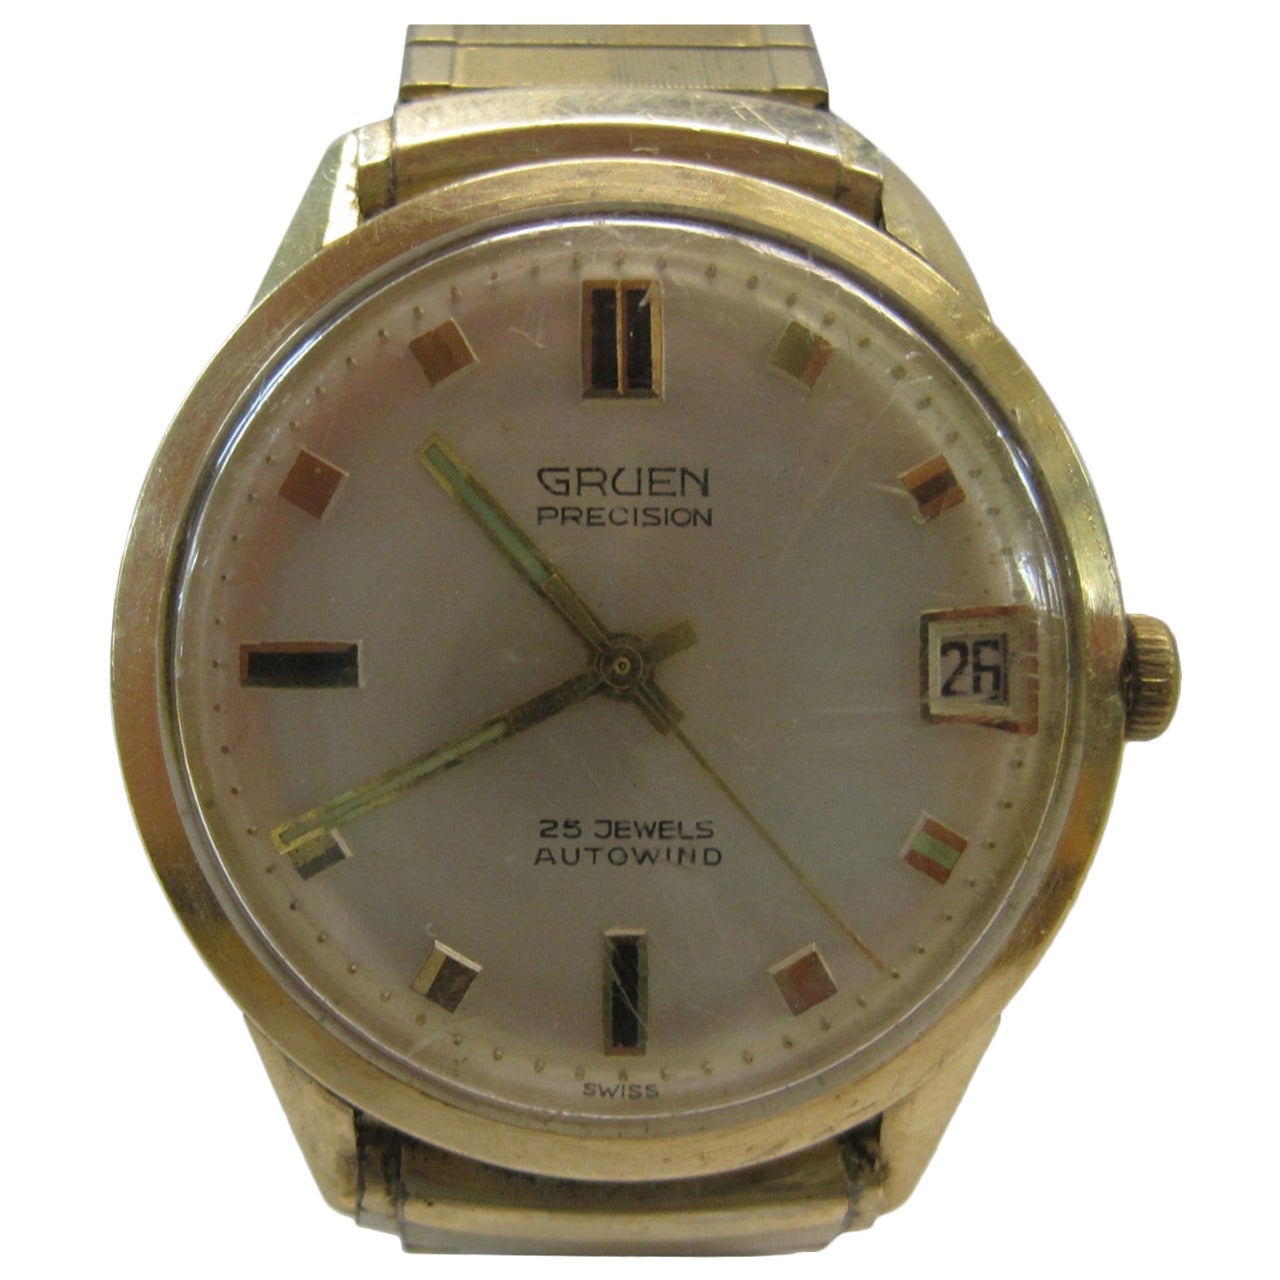 Gruen Precision Watch, 14-Karat Gold